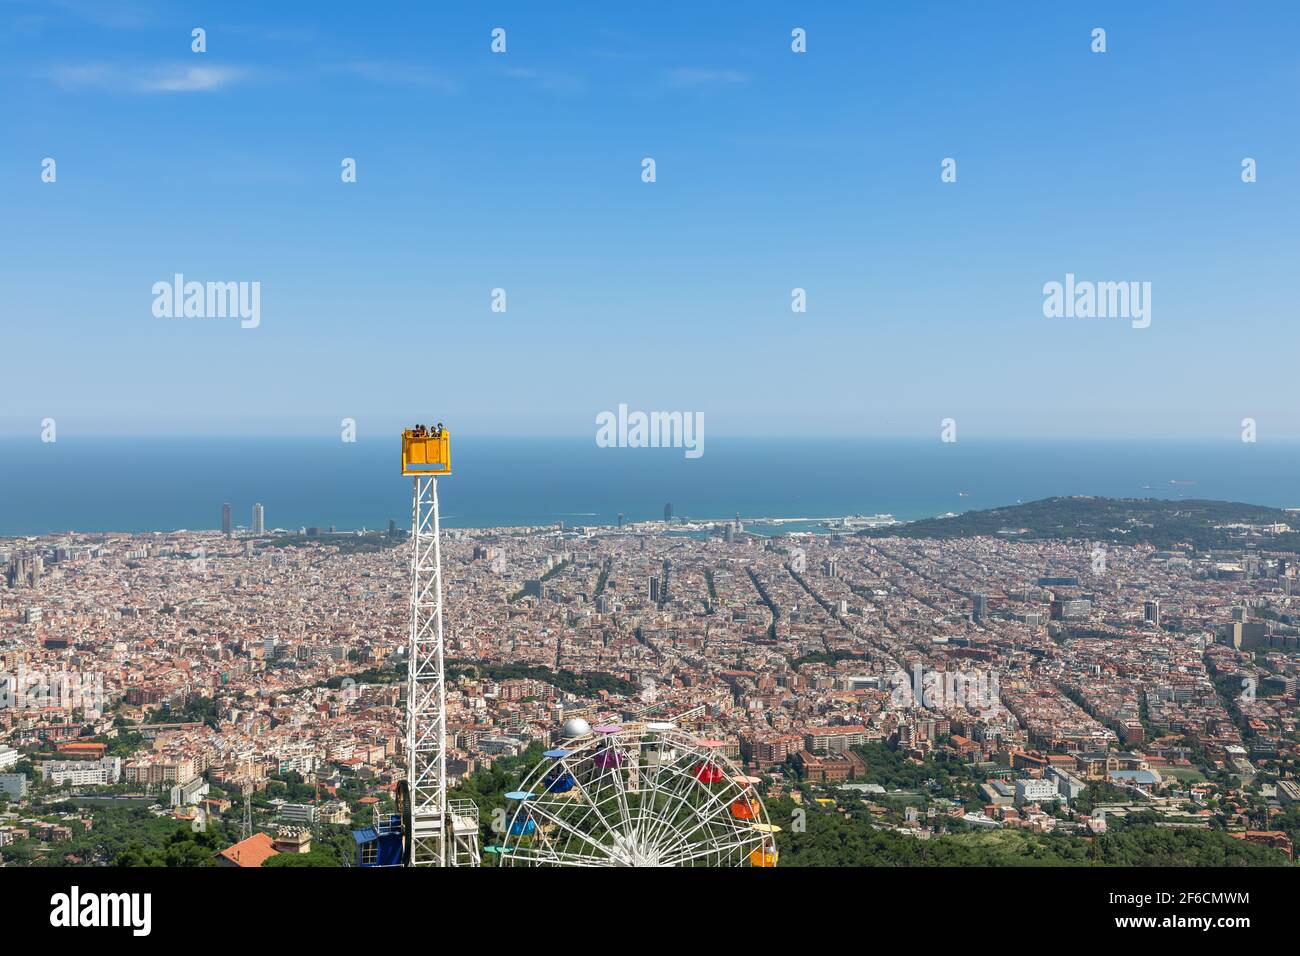 Looking over Barcelona from Tibidabo hill Amusement Park. Barcelona, Spain Stock Photo